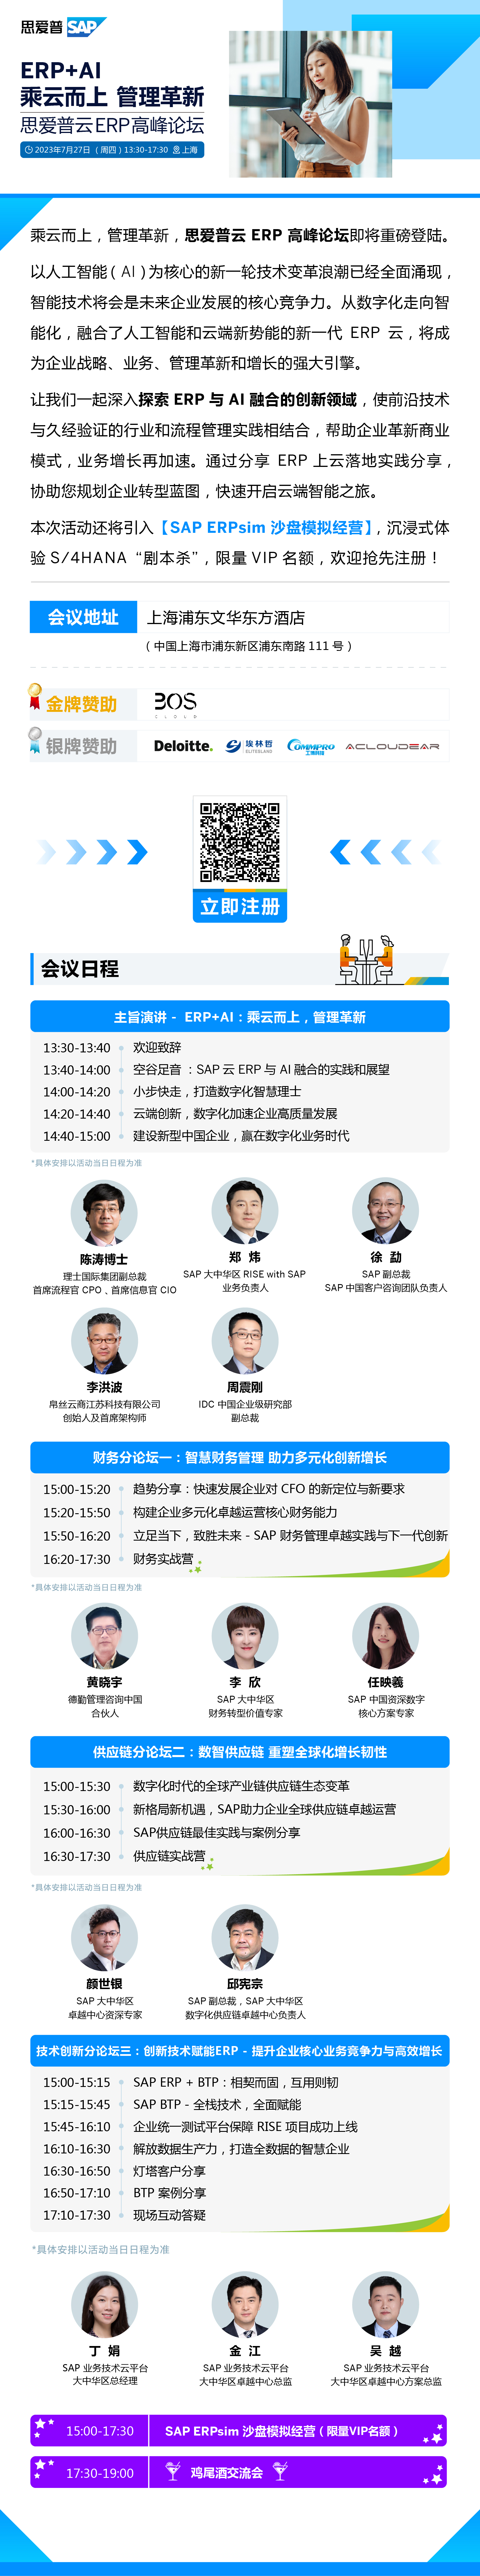 SAP ERP公有云上海高峰论坛邀请海报_partnerbsy.jpg